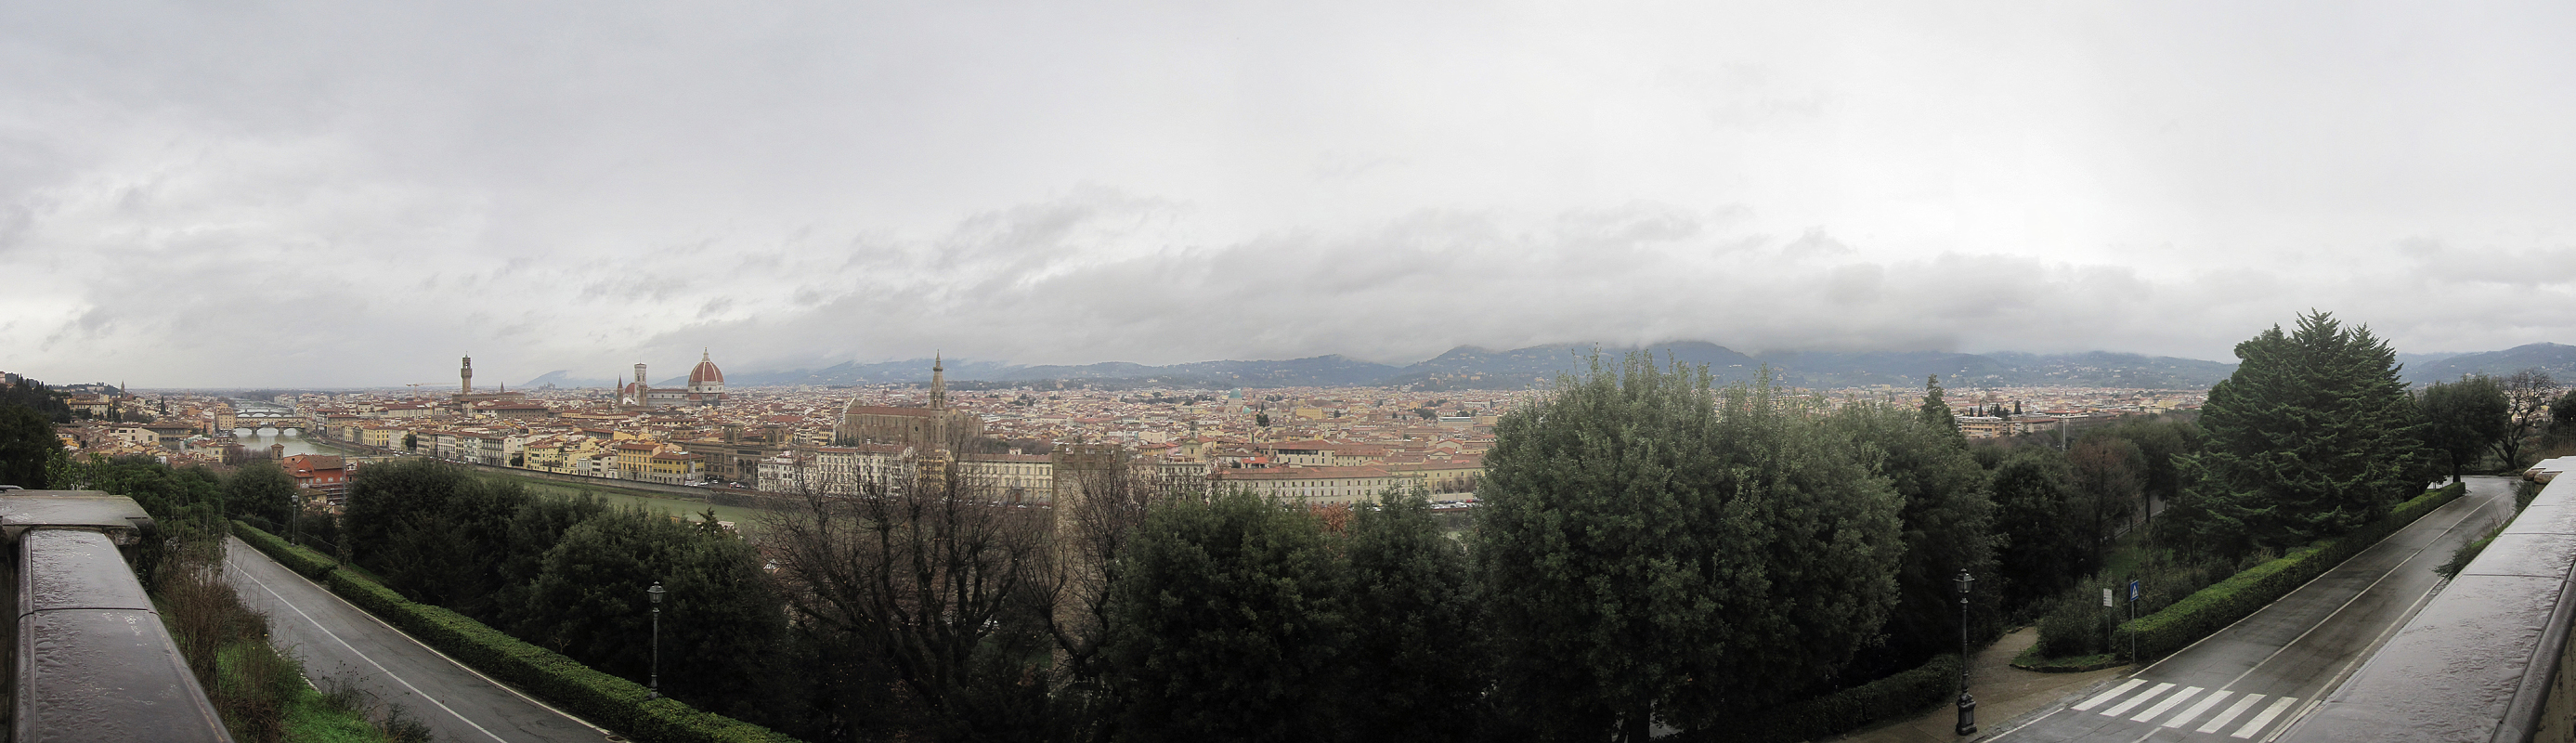 Firenze Panorama by Dmitry Ledentsov